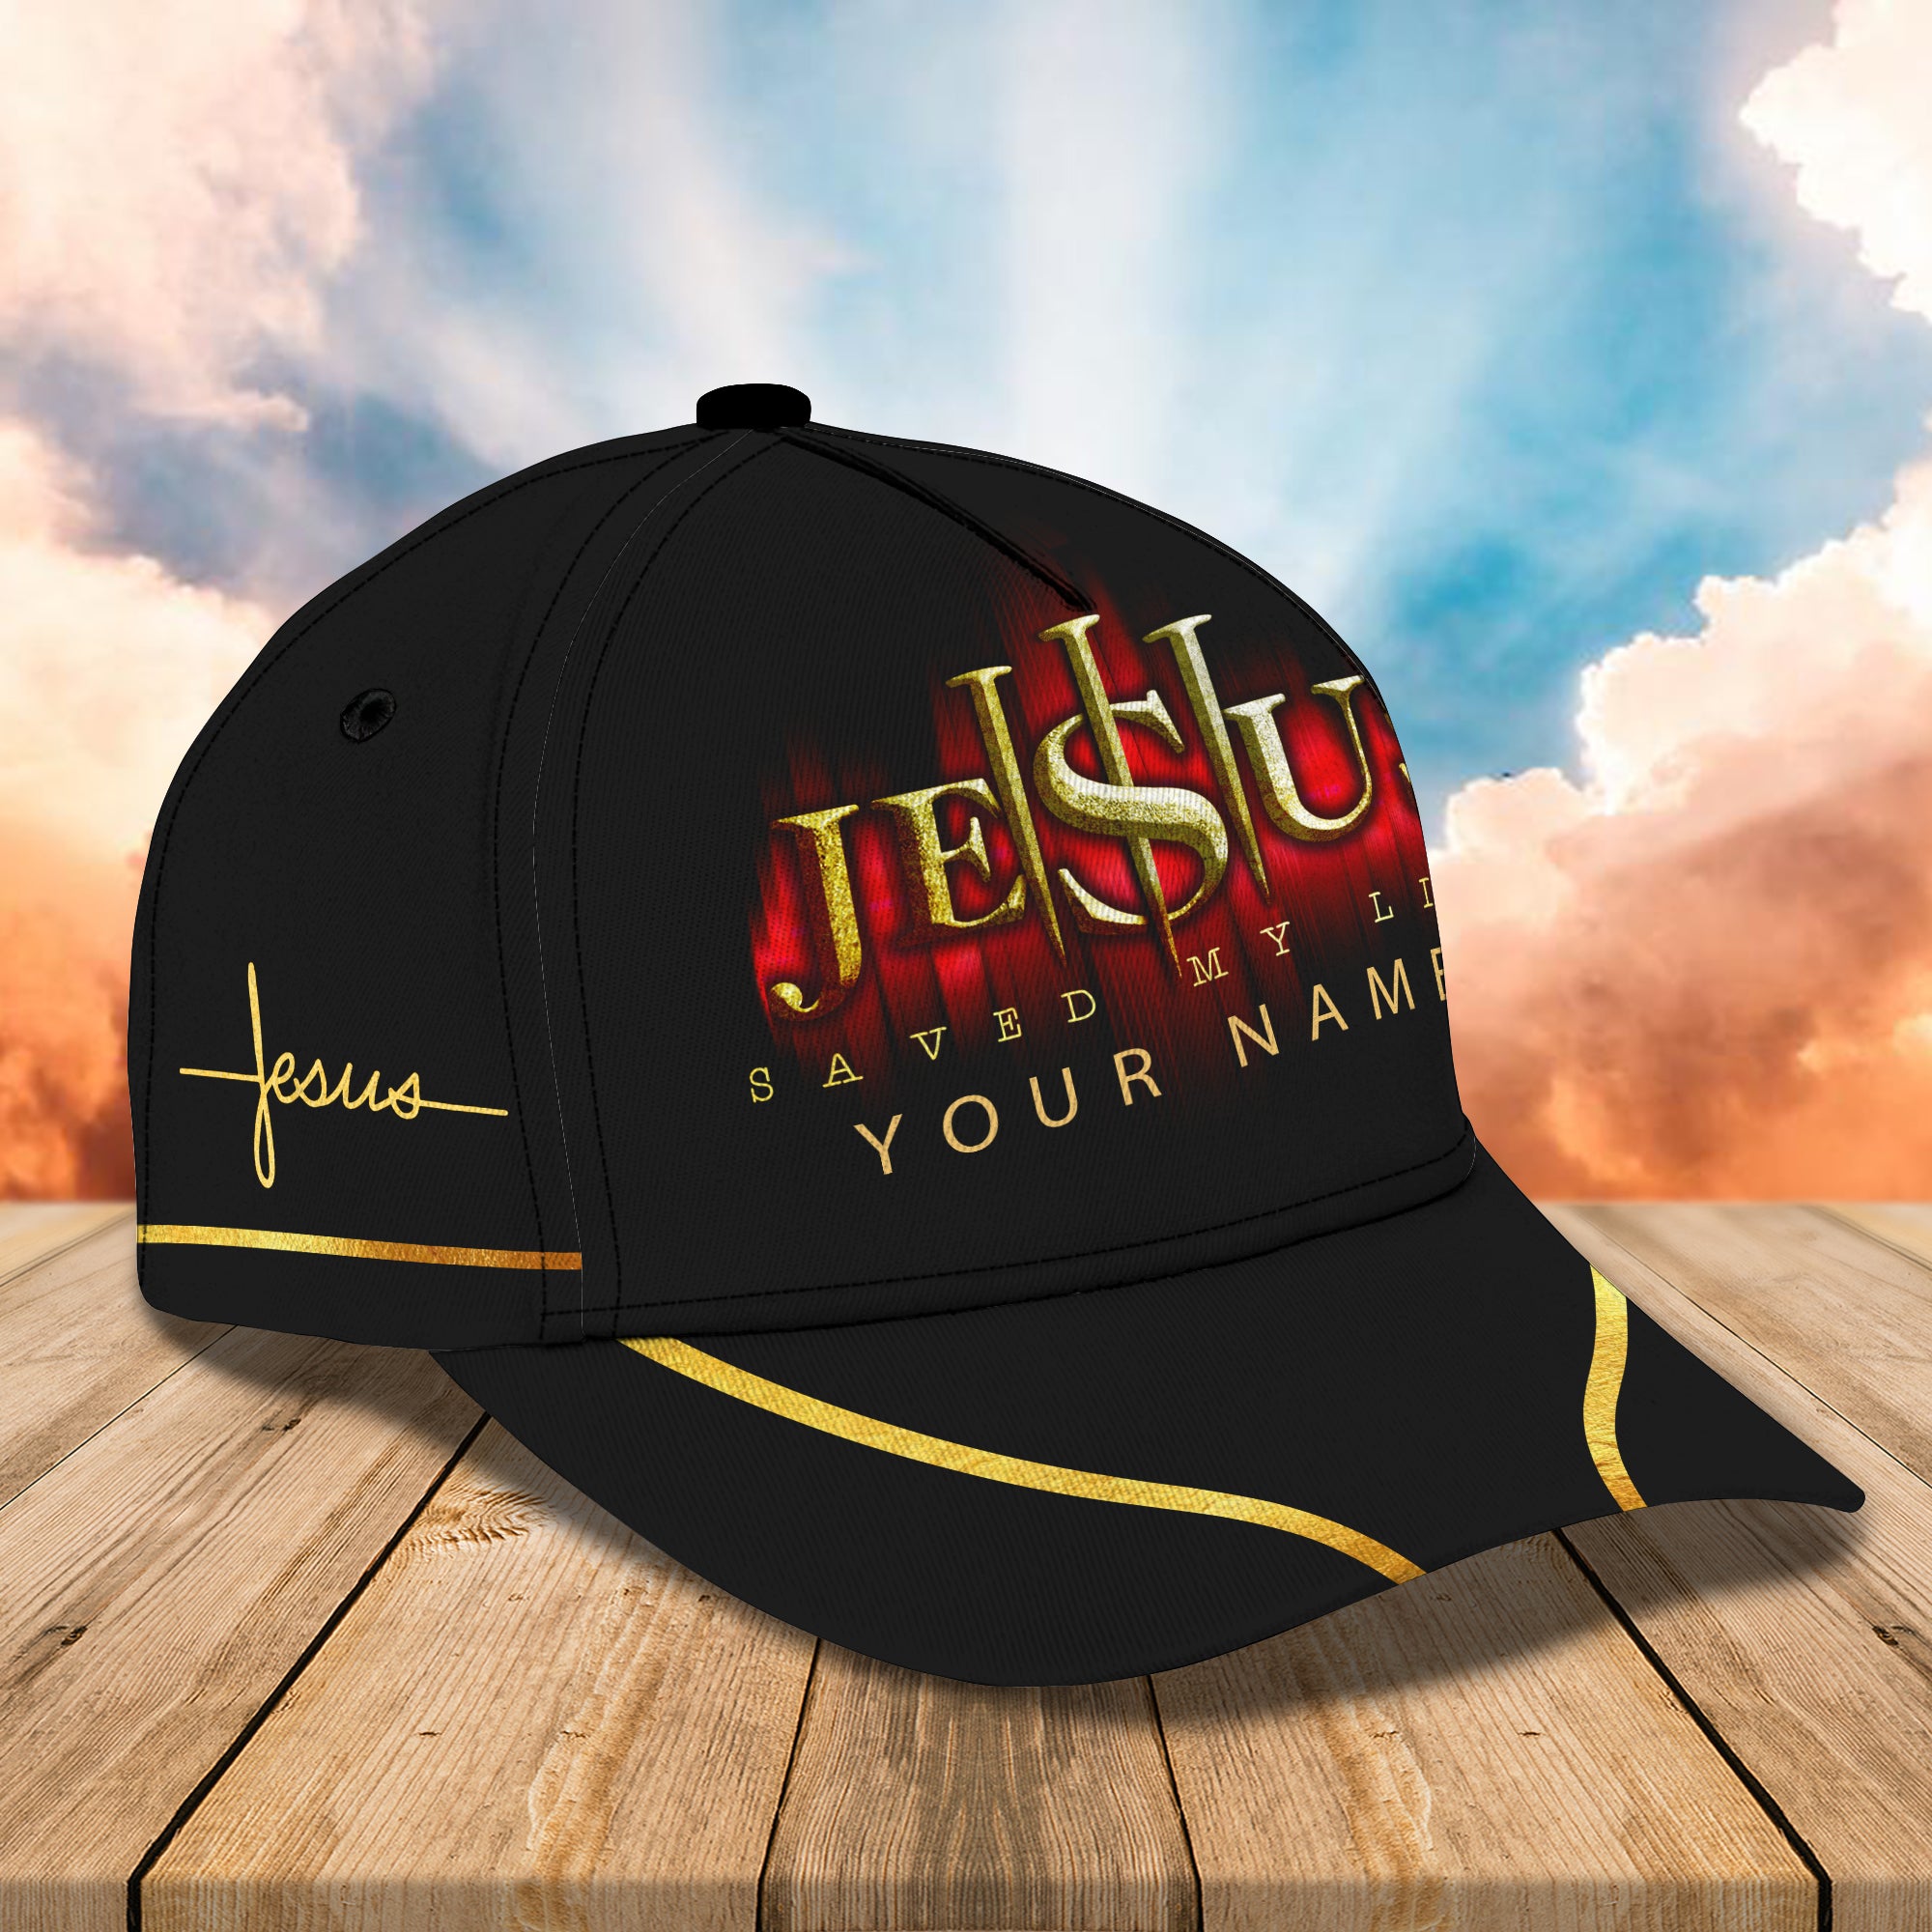 nnta - Personalized Name Cap - Jesus